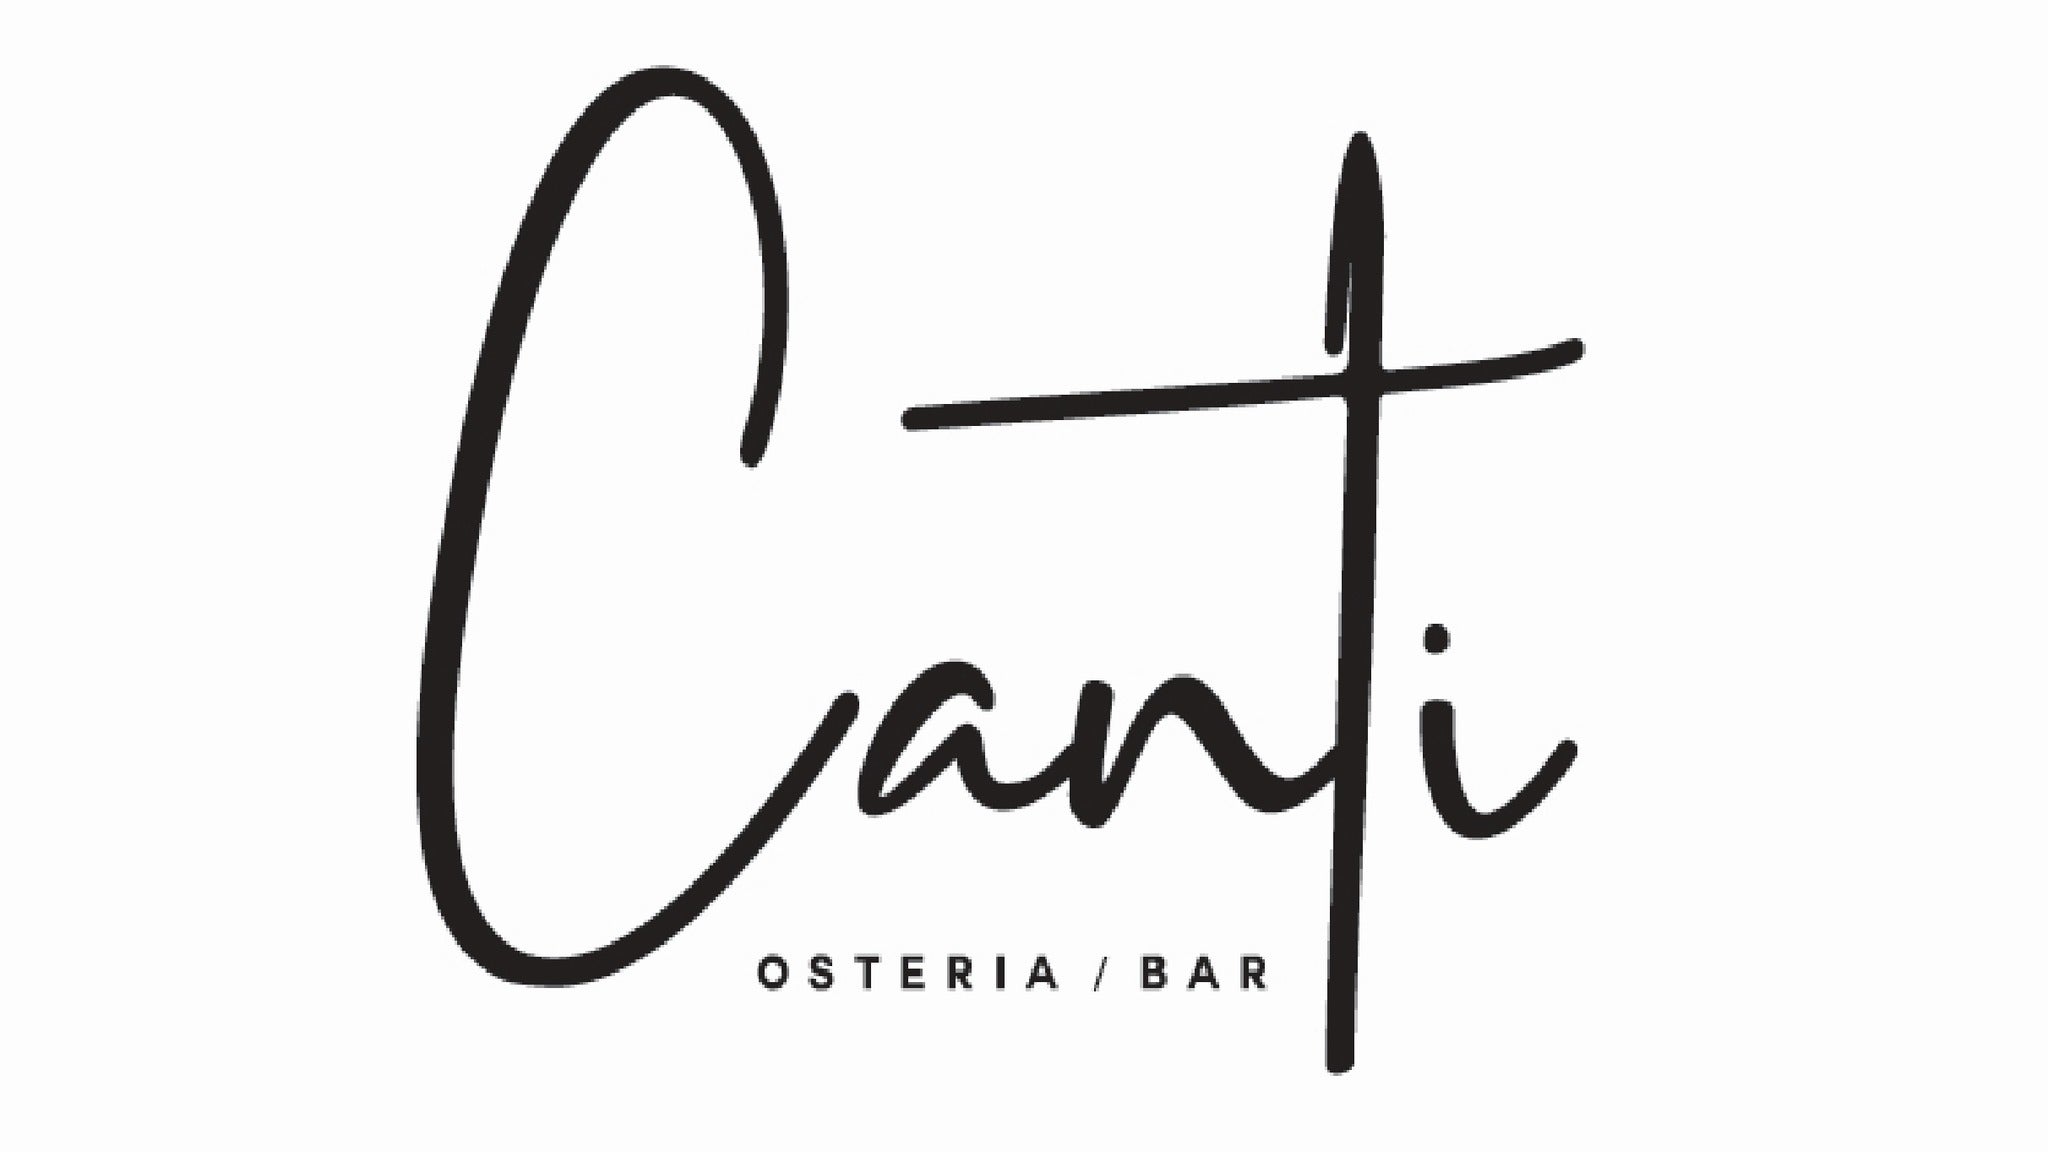 Restaurant Canti presale information on freepresalepasswords.com